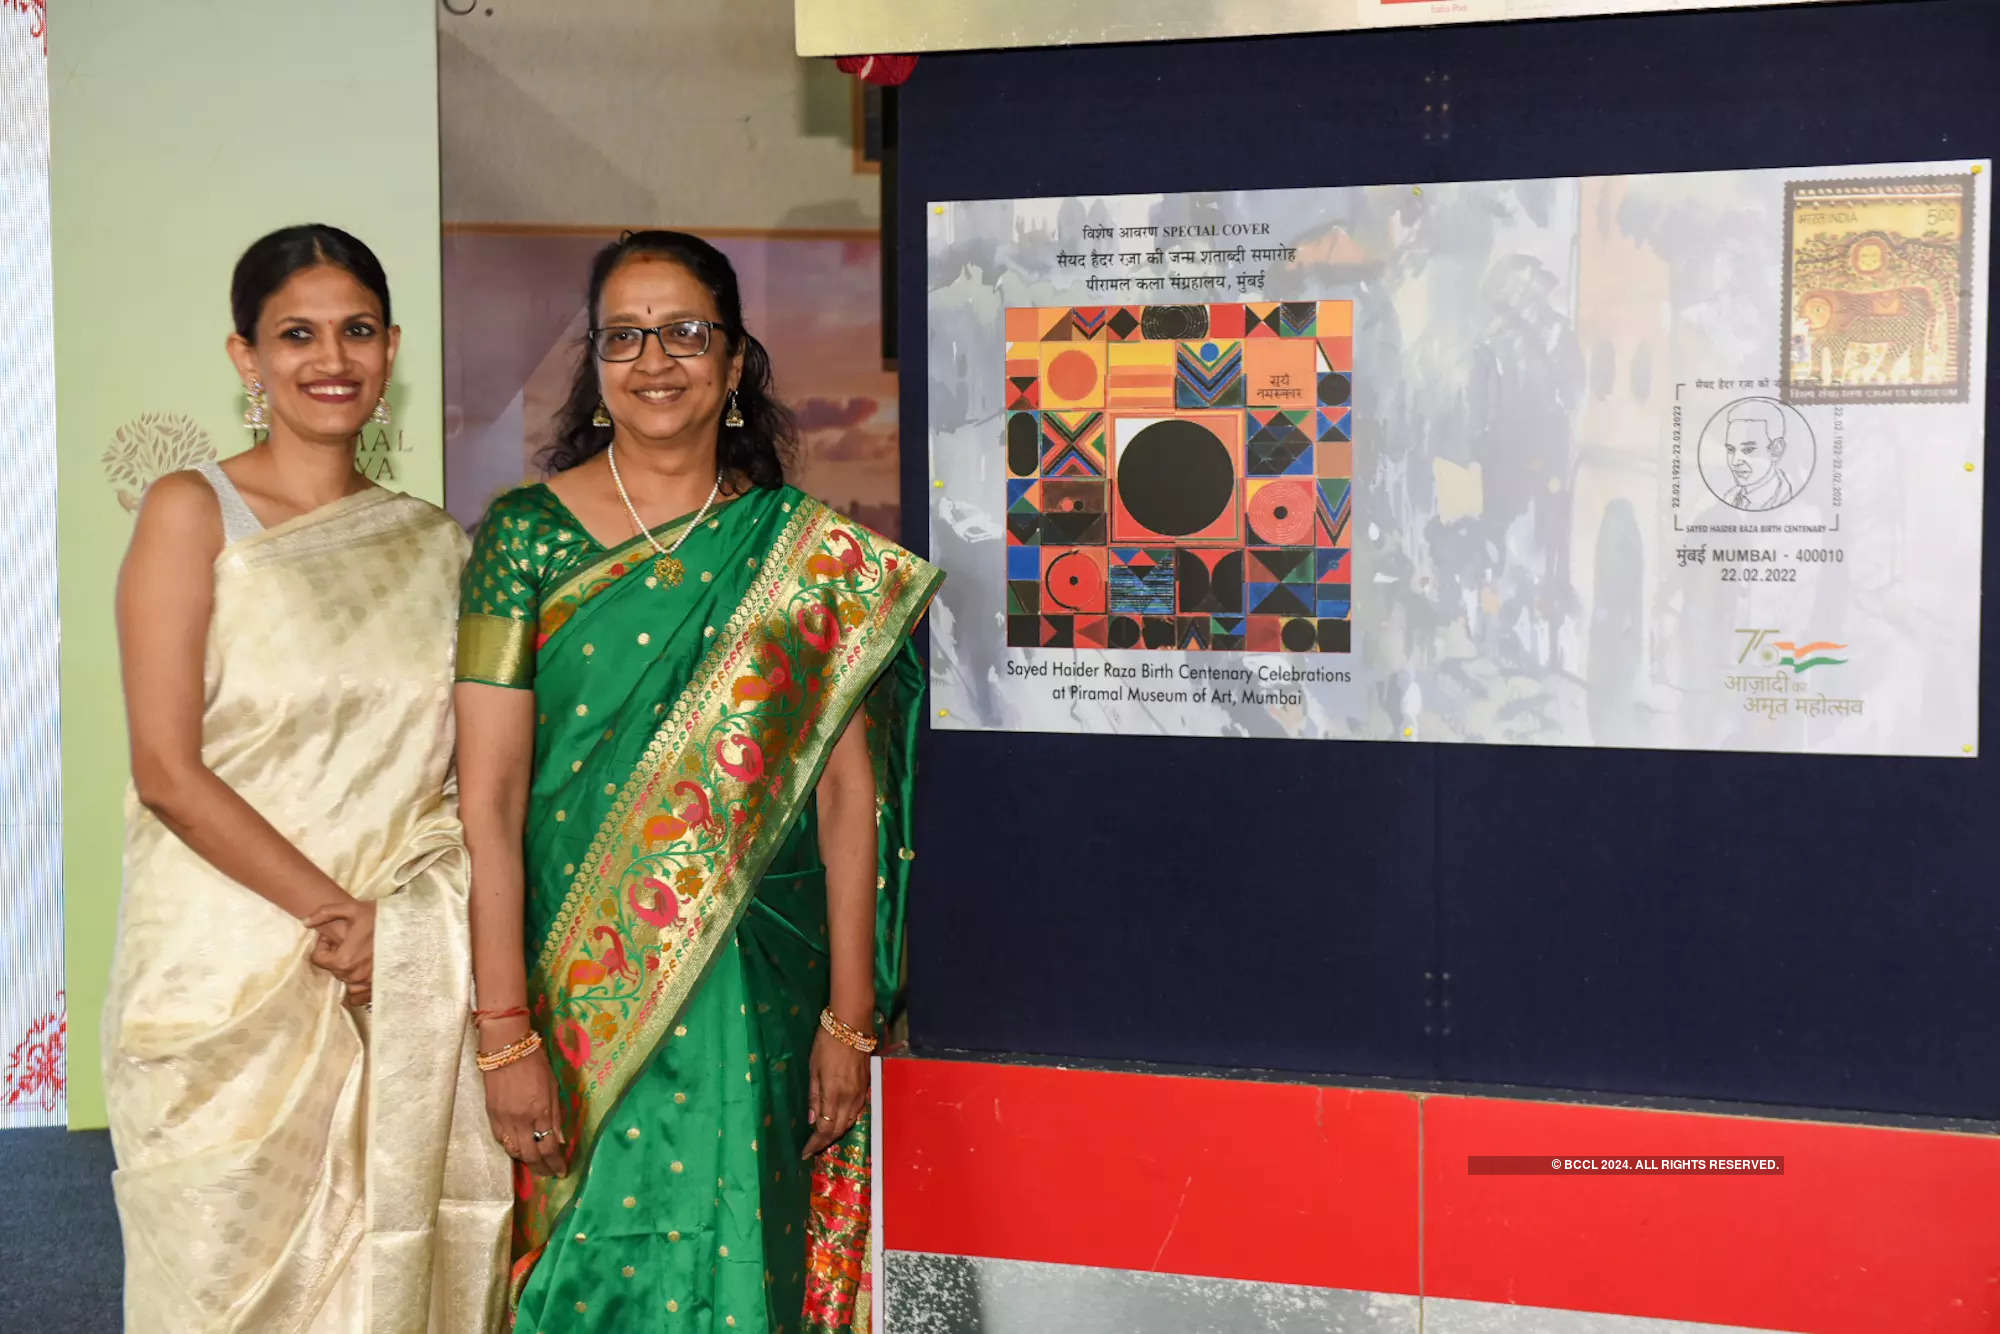 Piramal Museum of Art celebrates S H Raza's centenary by exhibiting his works